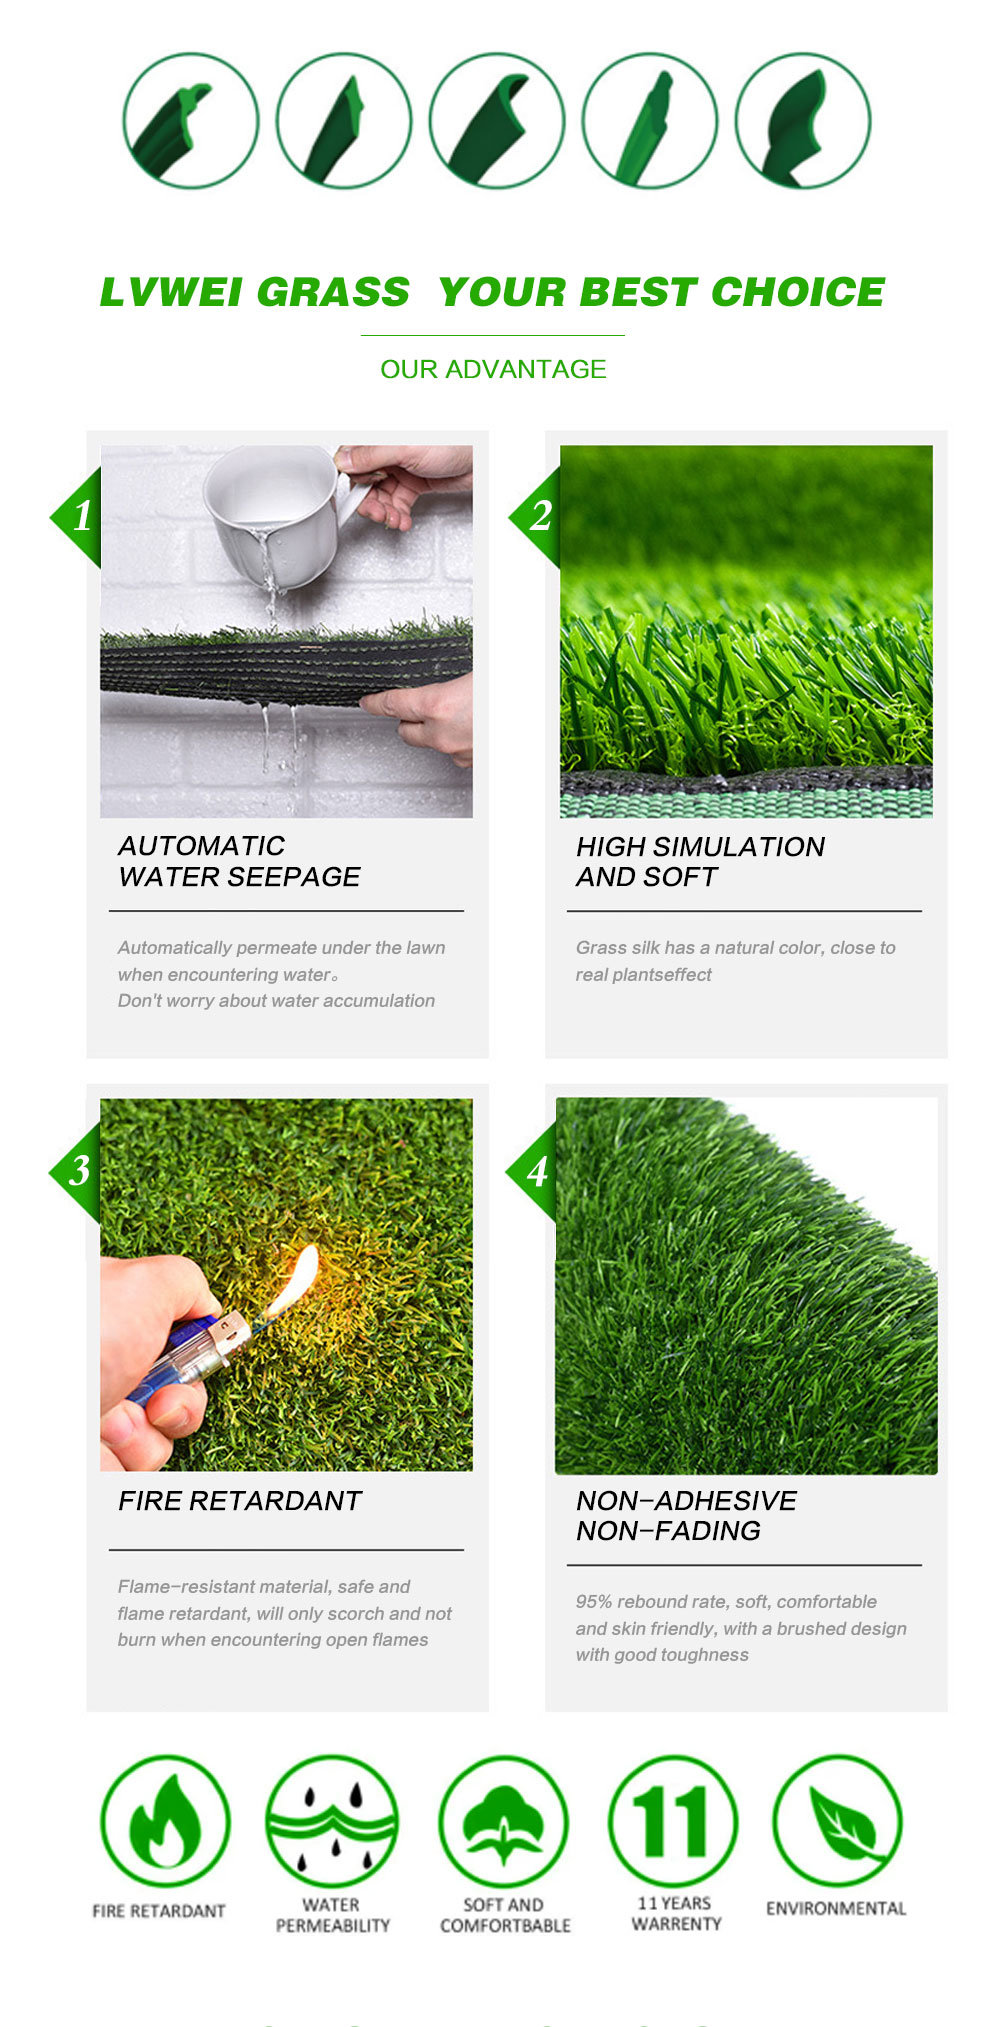 for Landscaping PE Lw PP Bag 2m*25m Carpet Sport Grass